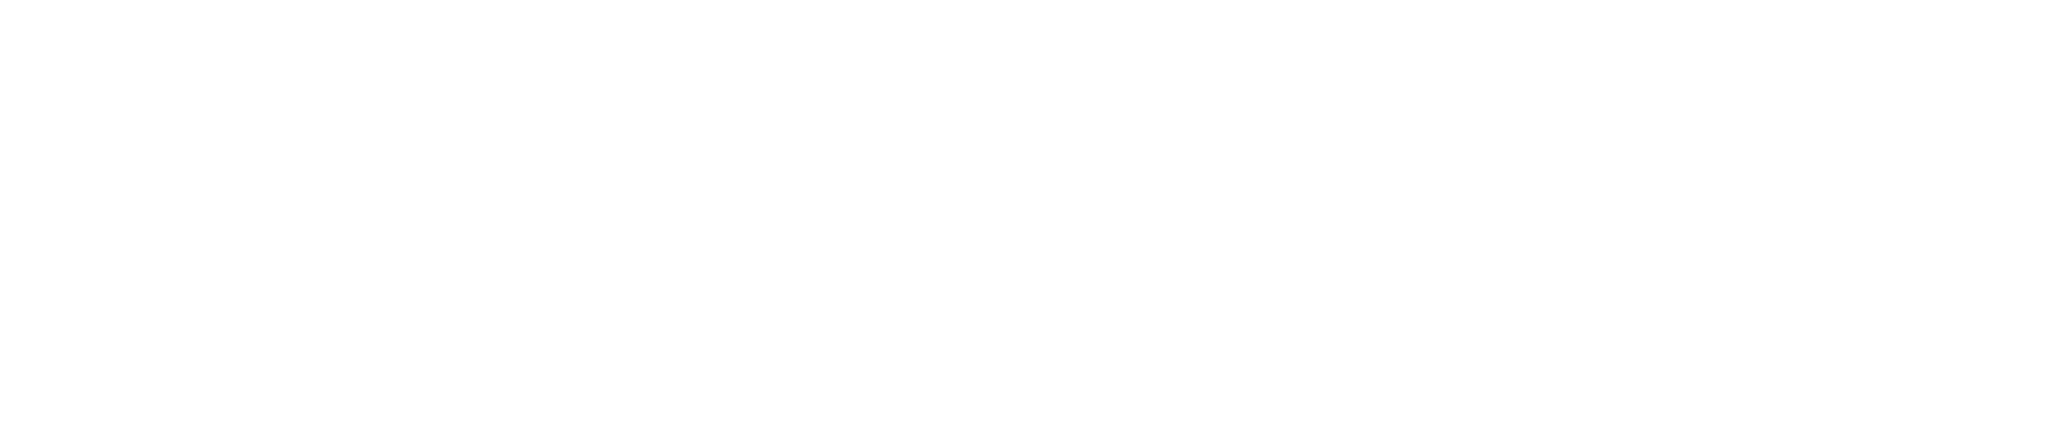 jeffrey c dawes logo white